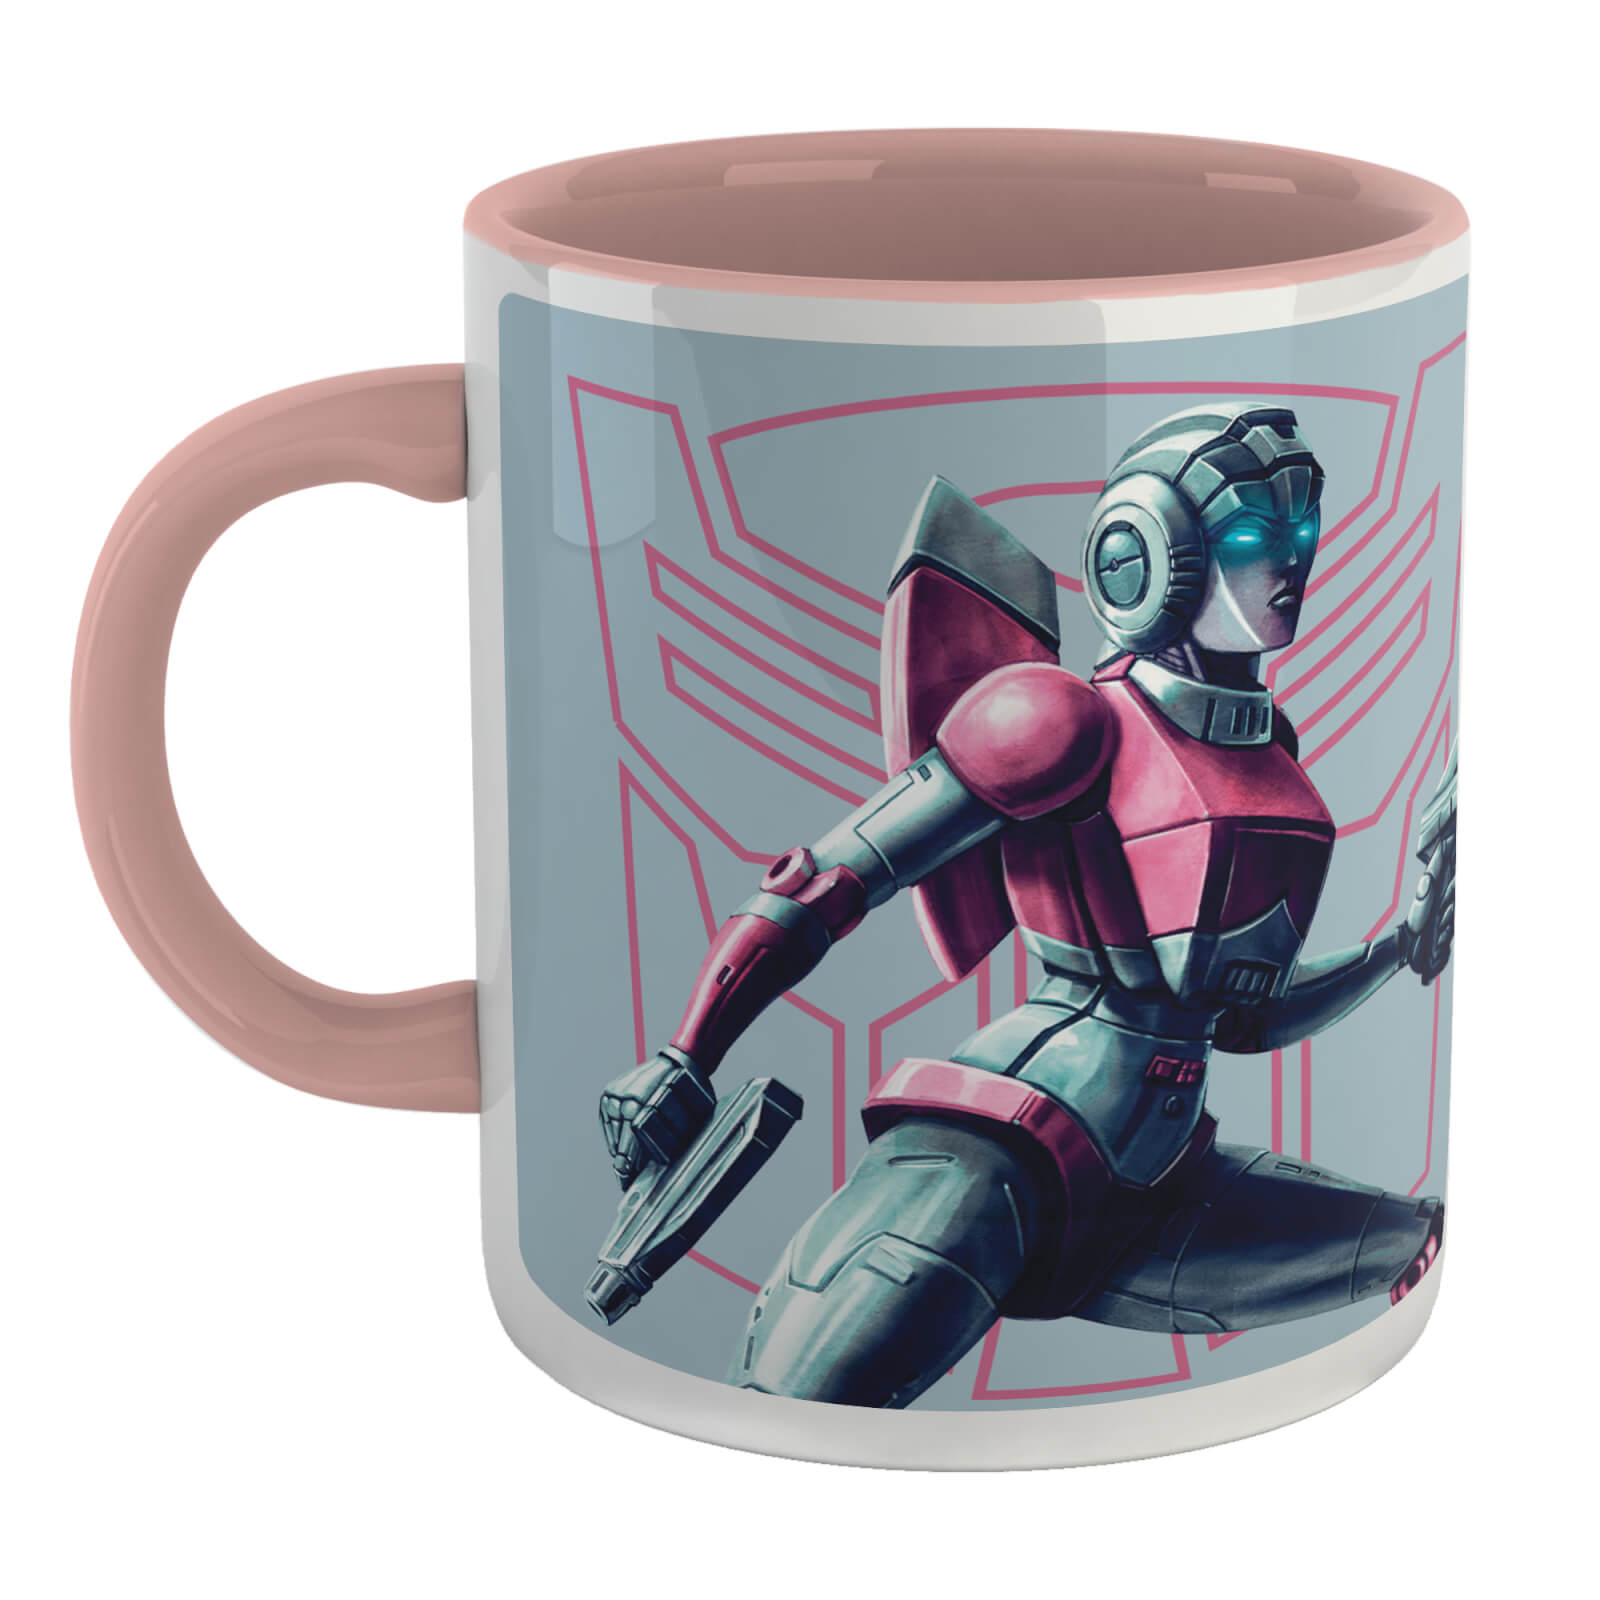 Transformers Arcee Mug - White/Pink